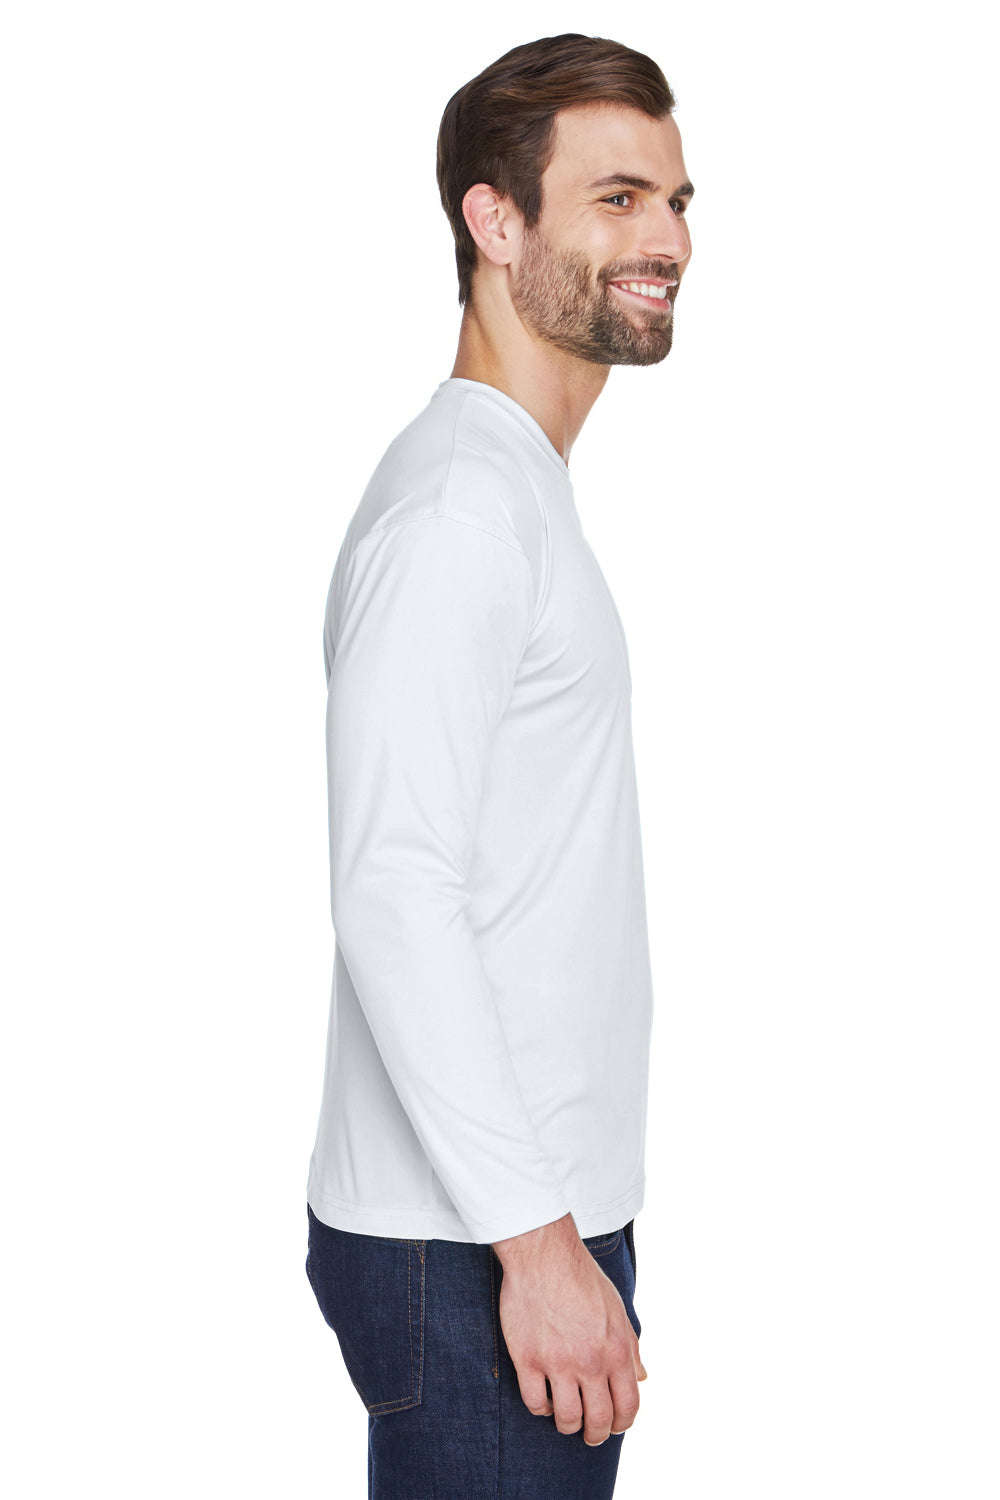 UltraClub 8422 Mens Cool & Dry Performance Moisture Wicking Long Sleeve Crewneck T-Shirt White Side